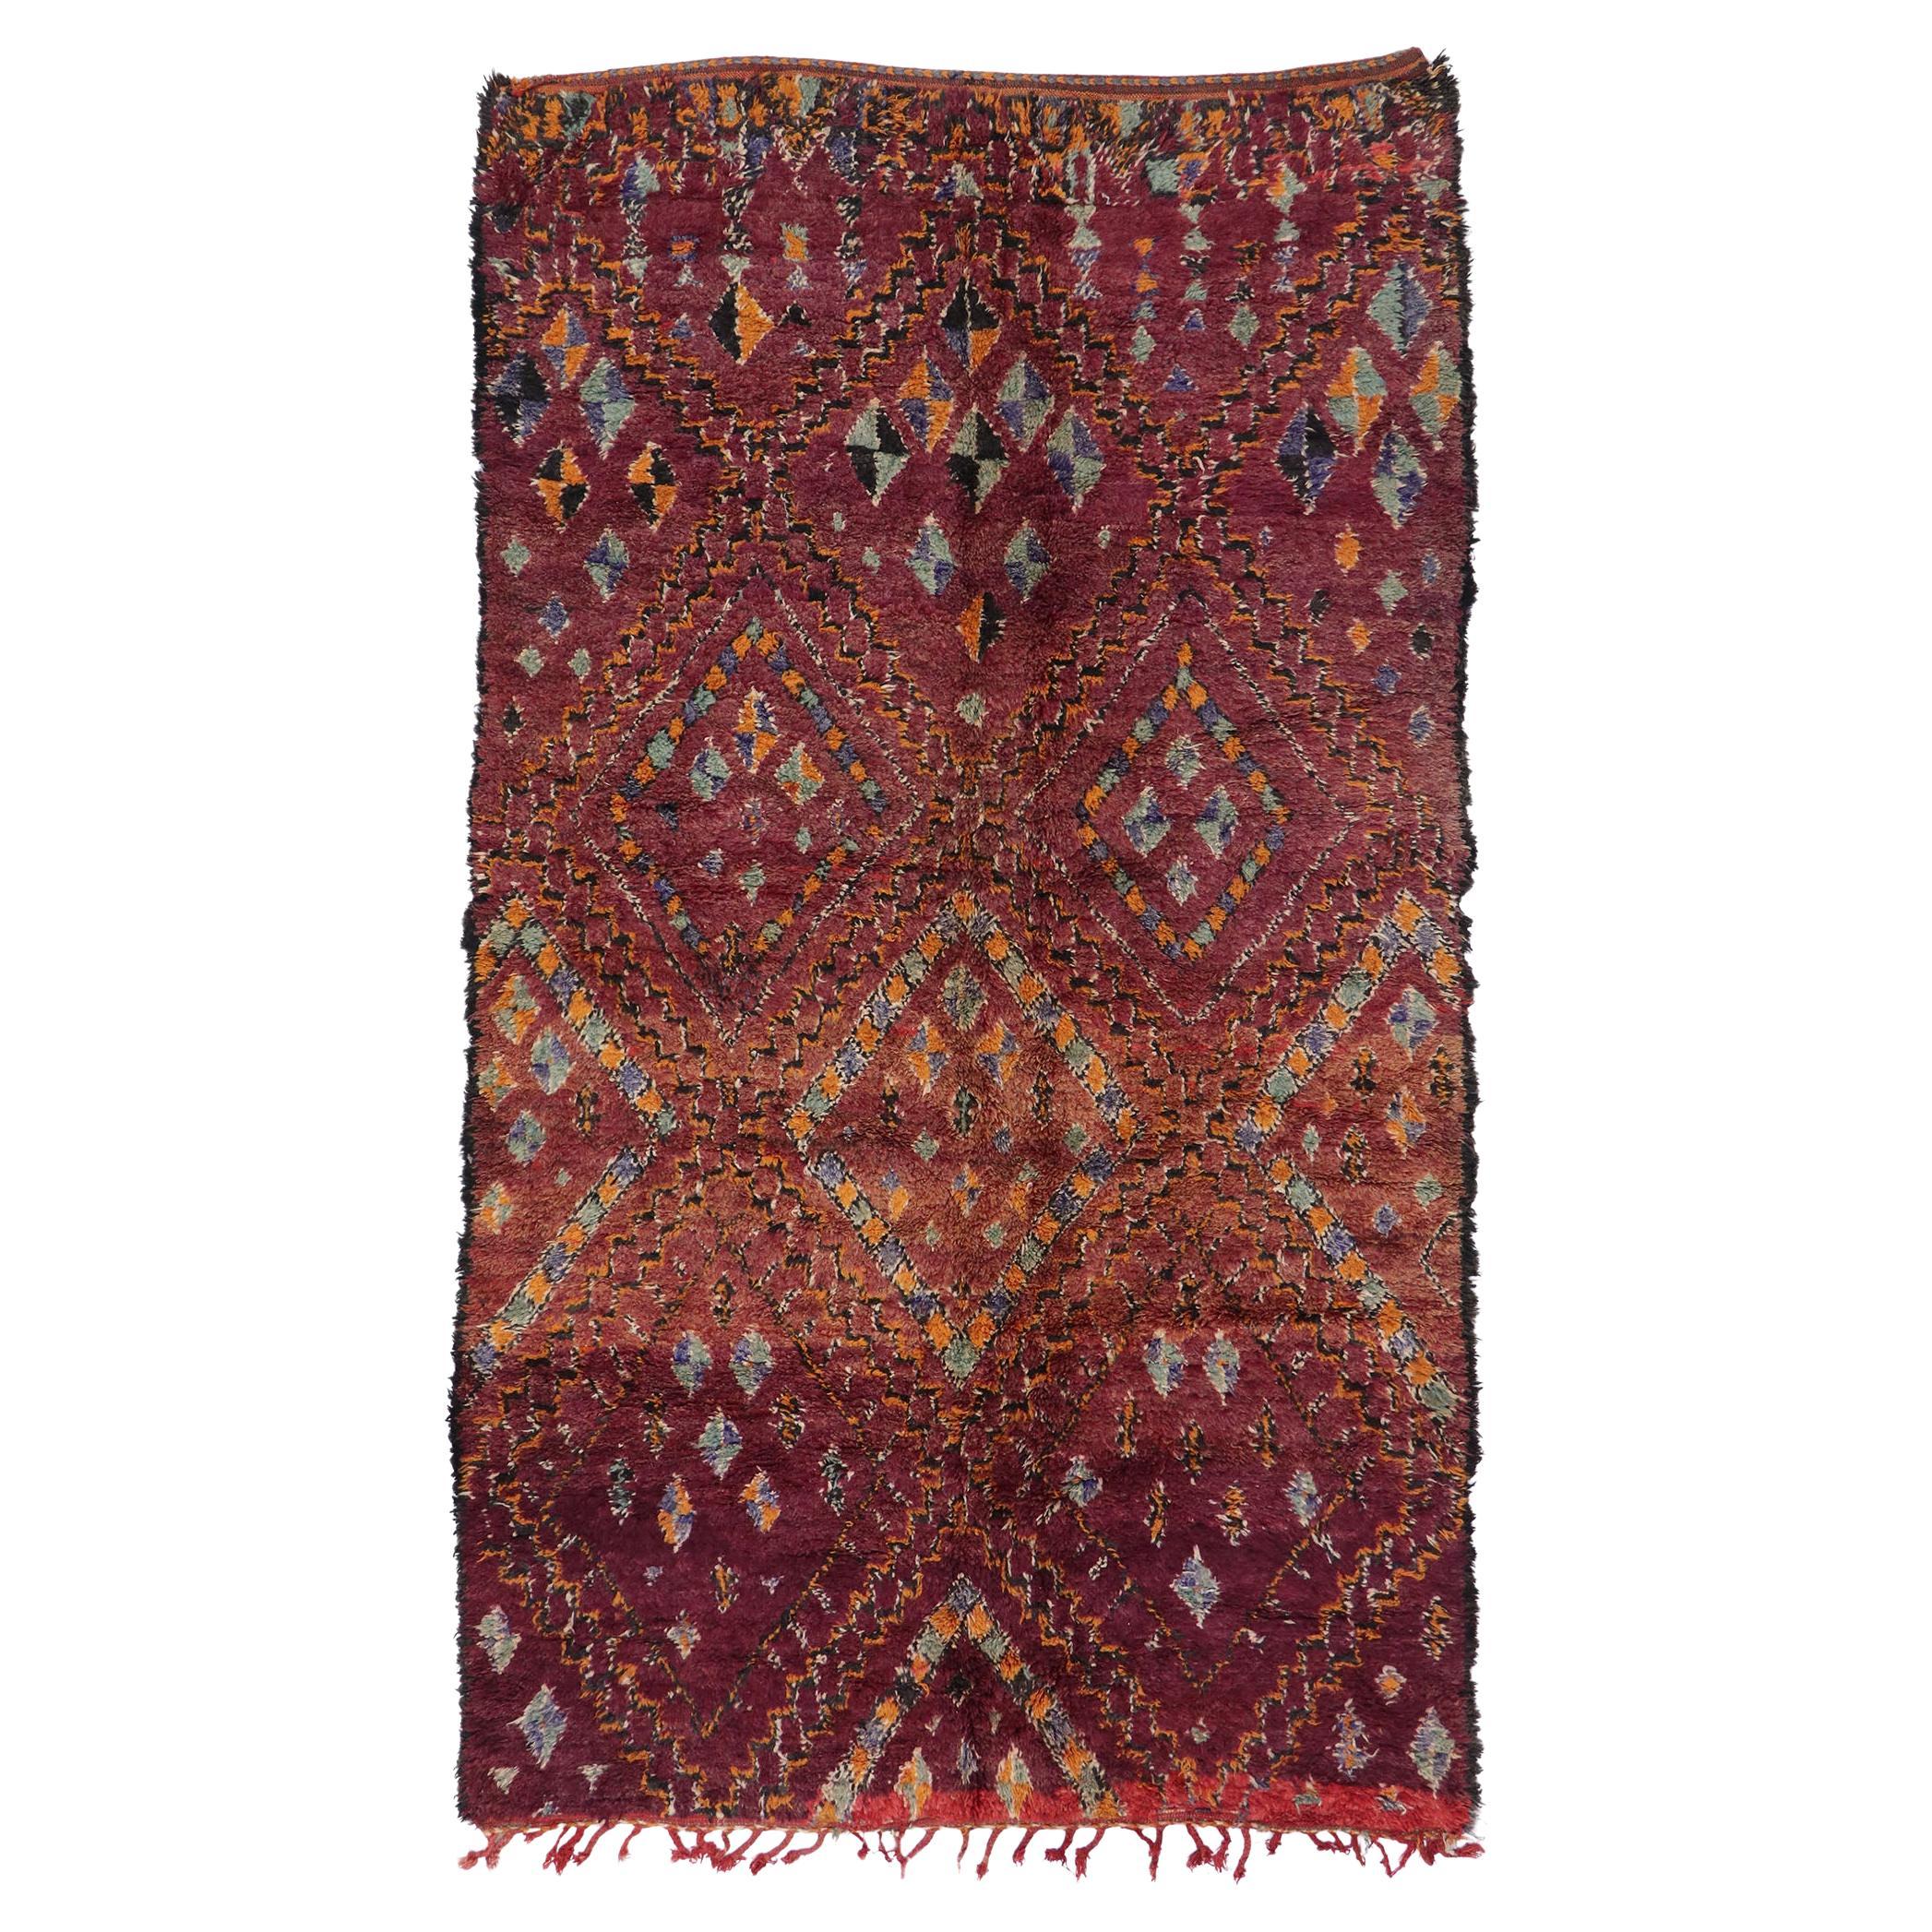 Vintage Beni MGuild Moroccan Rug, Nomadic Charm Meets Jungalow Boho